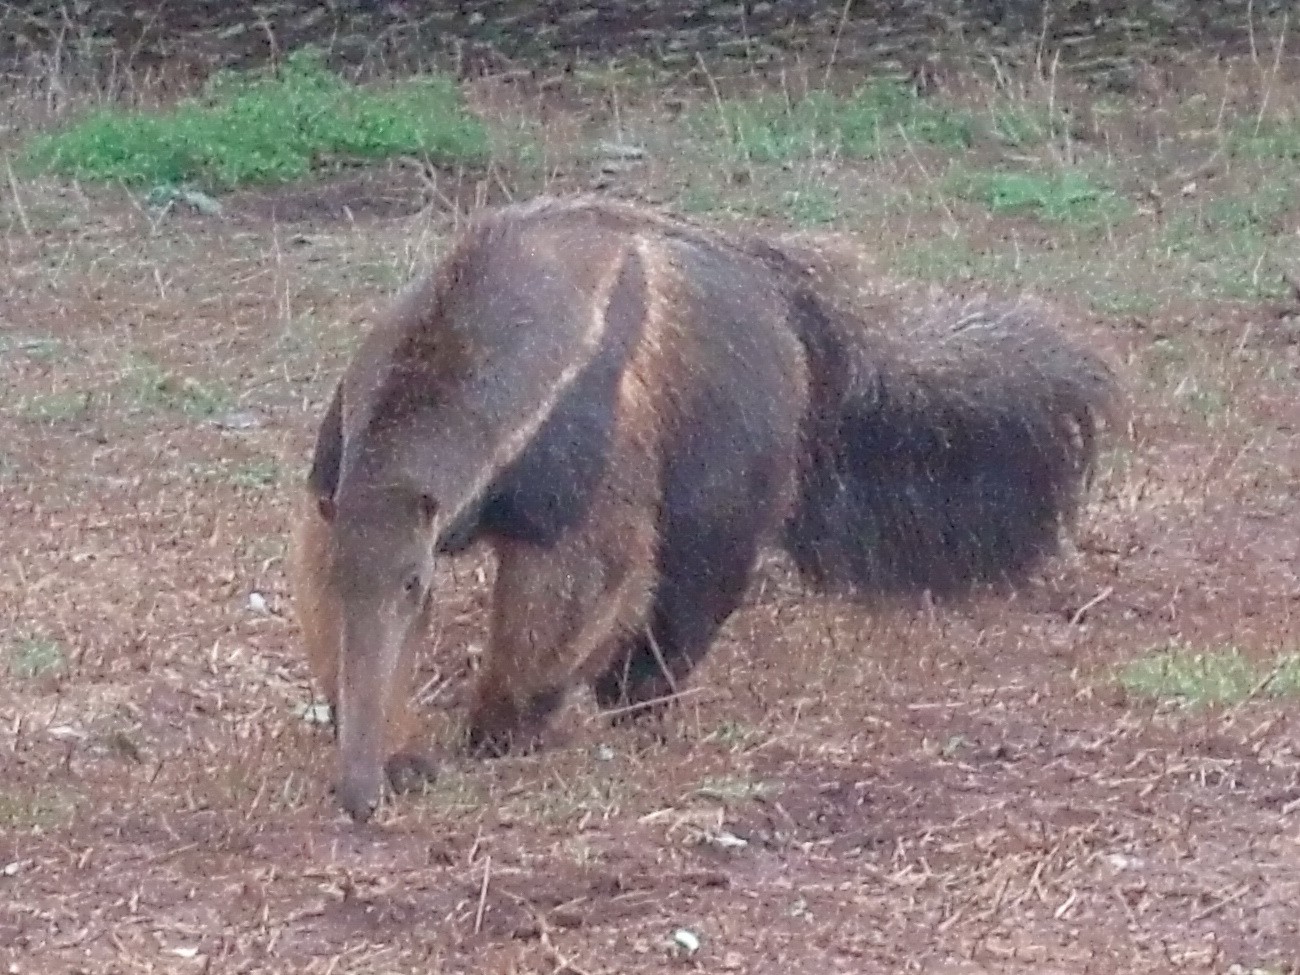 Oso Hormiguero (Coati) in the Itaibu Zoo